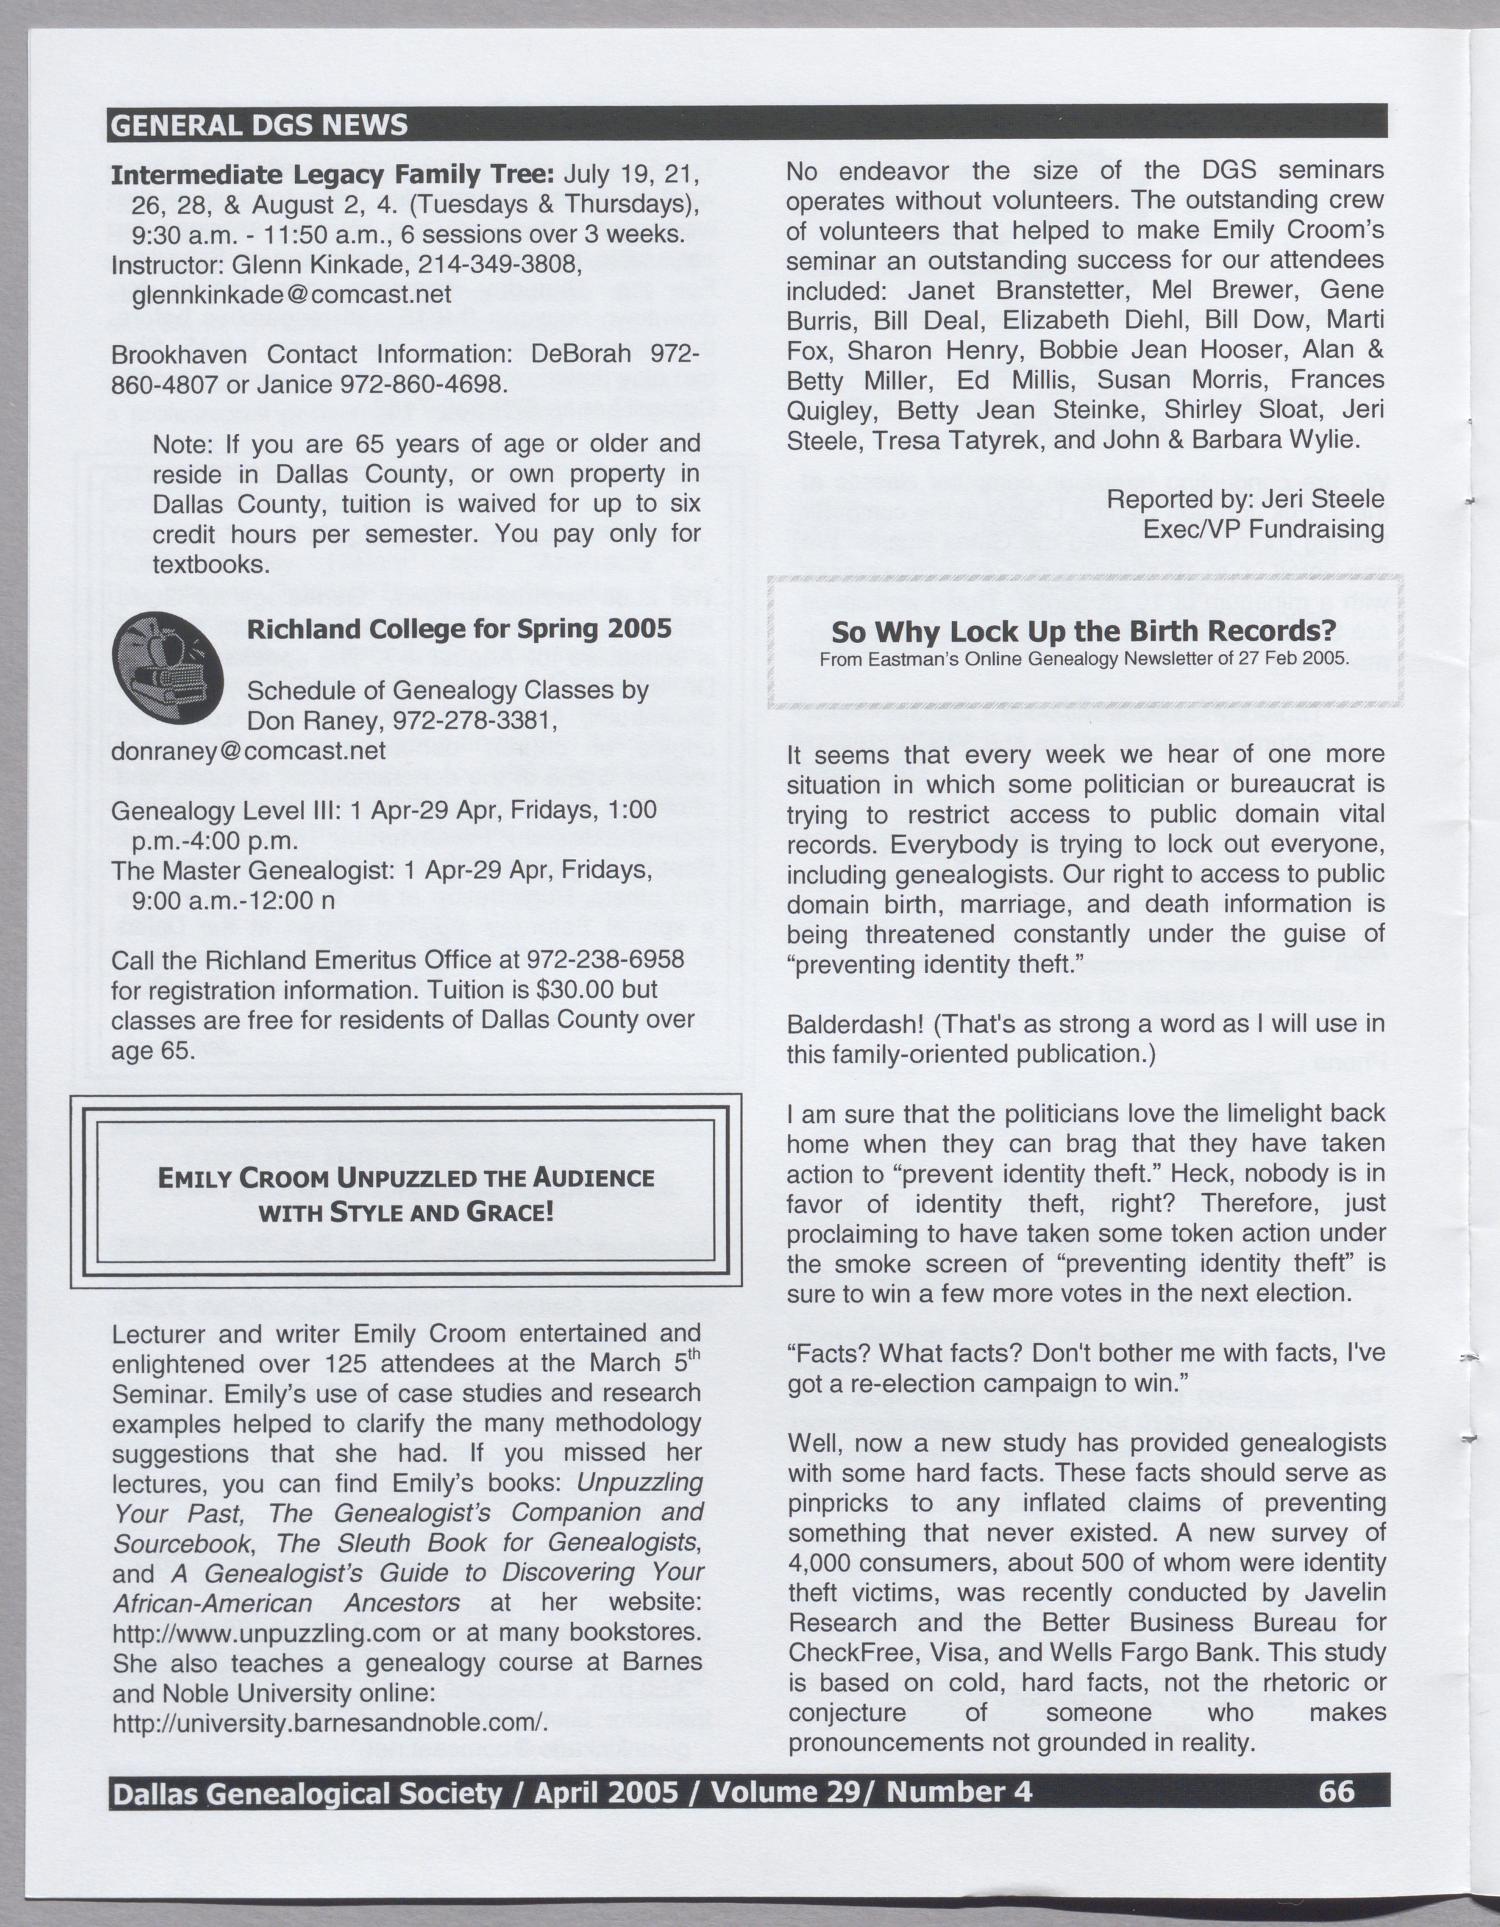 DGS Newsletter, Volume 29, Number 4, April 2005
                                                
                                                    66
                                                